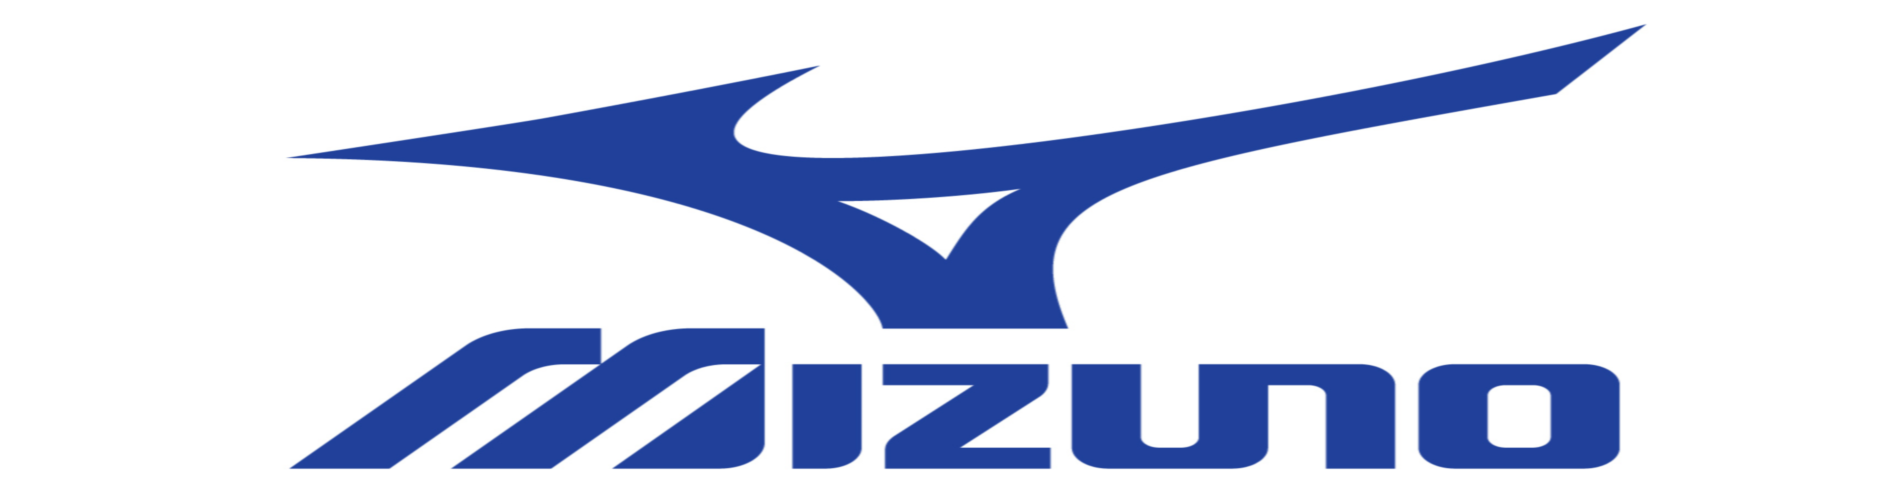 File:MIZUNO logo.svg